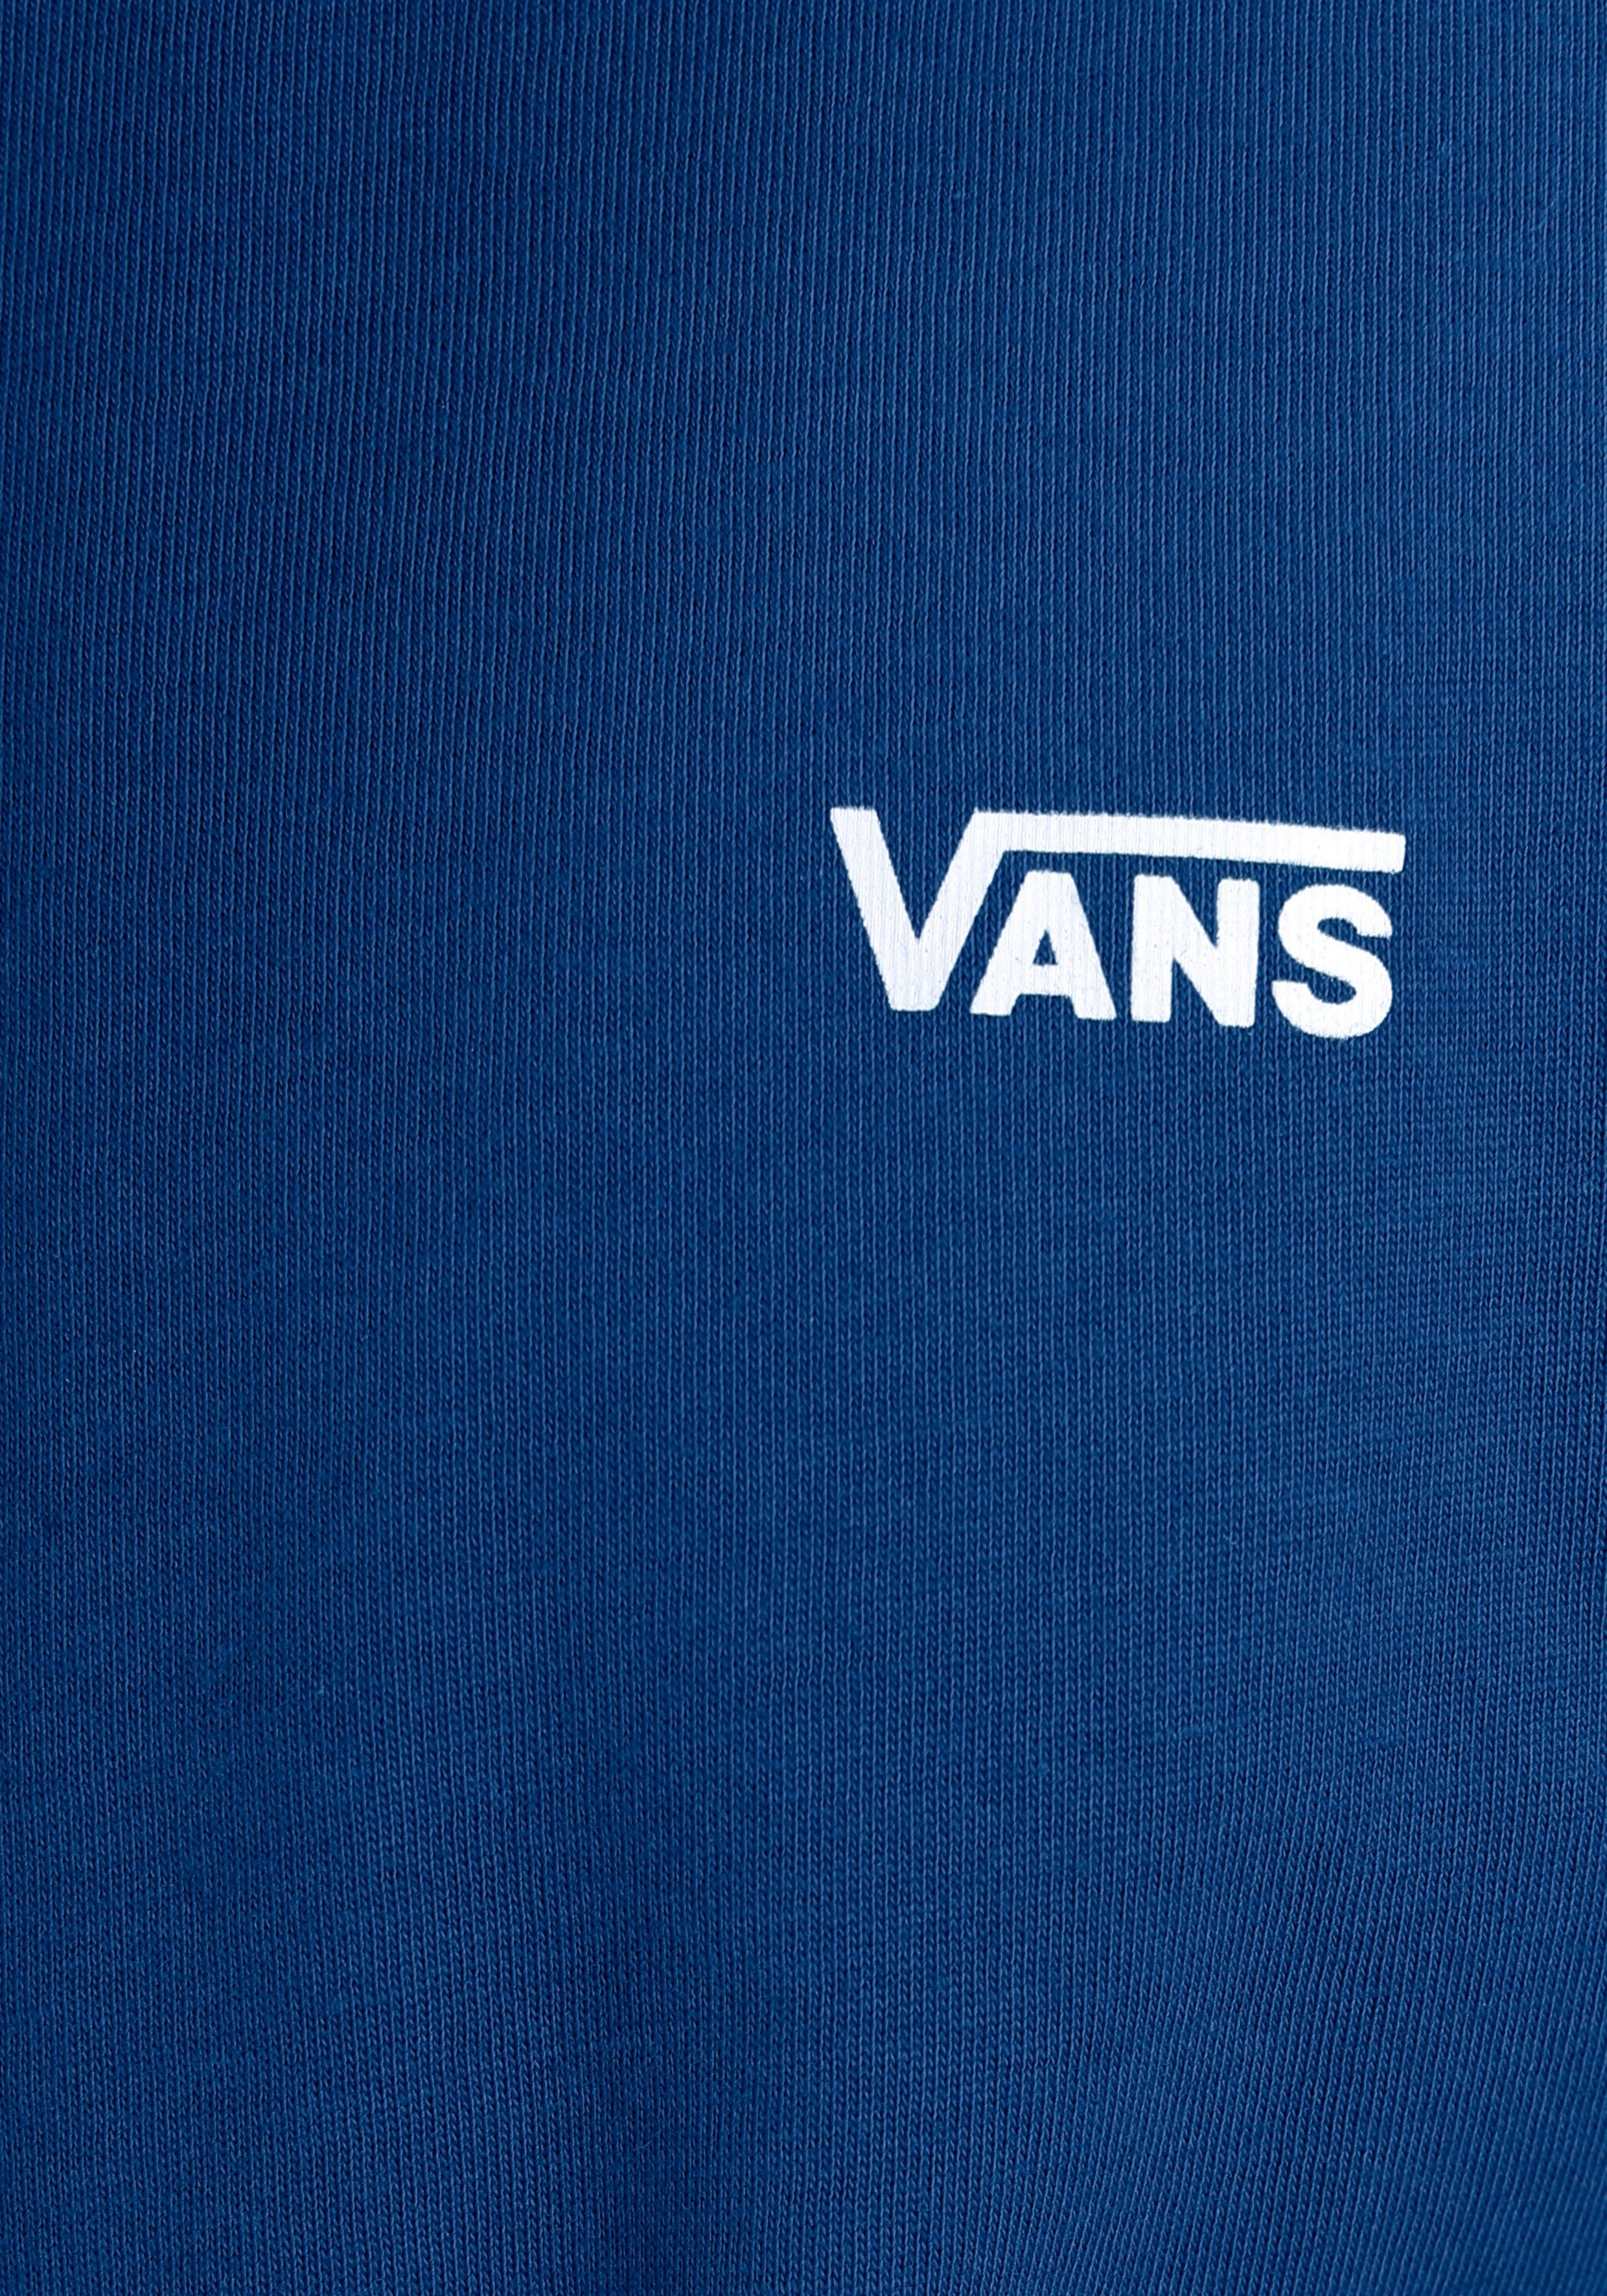 Vans T-Shirt CHEST LEFT blue true TEE BOYS BY